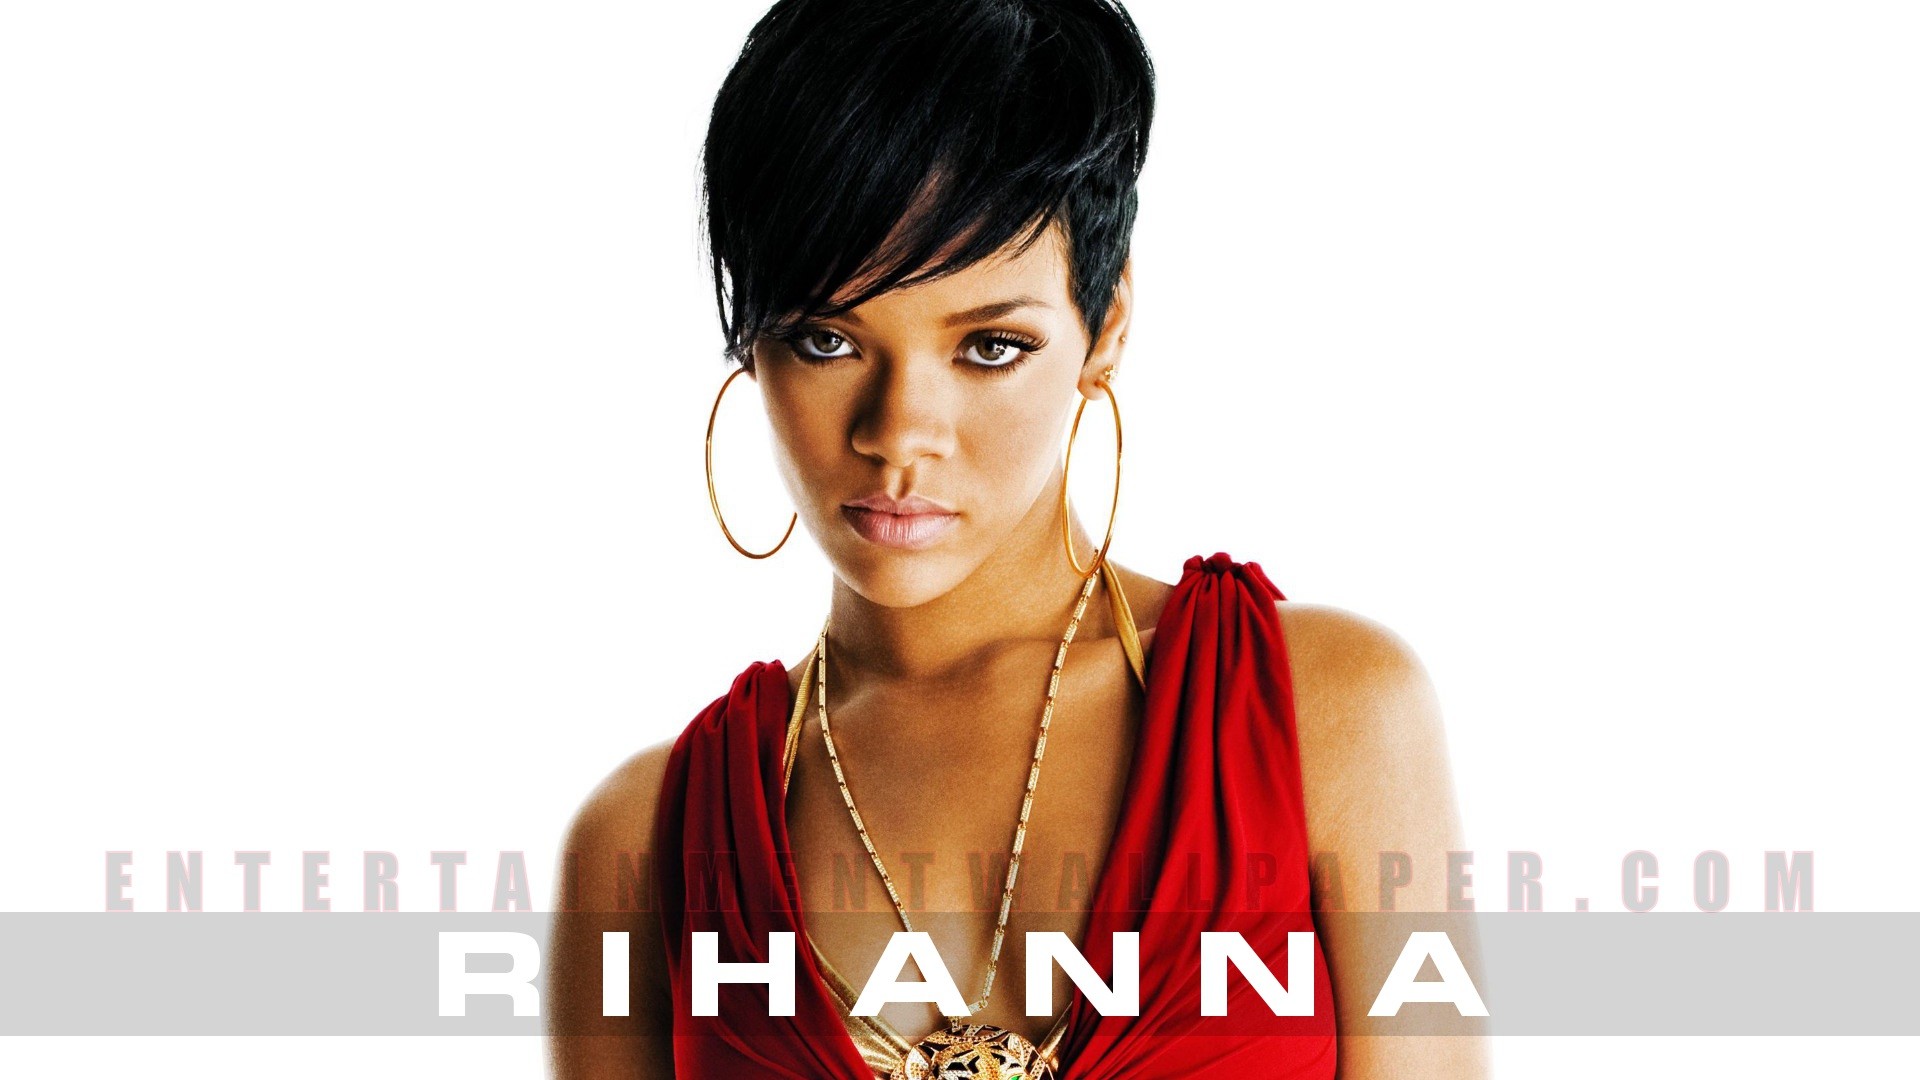 1920x1080 Rihanna Wallpaper - Original size, download now.